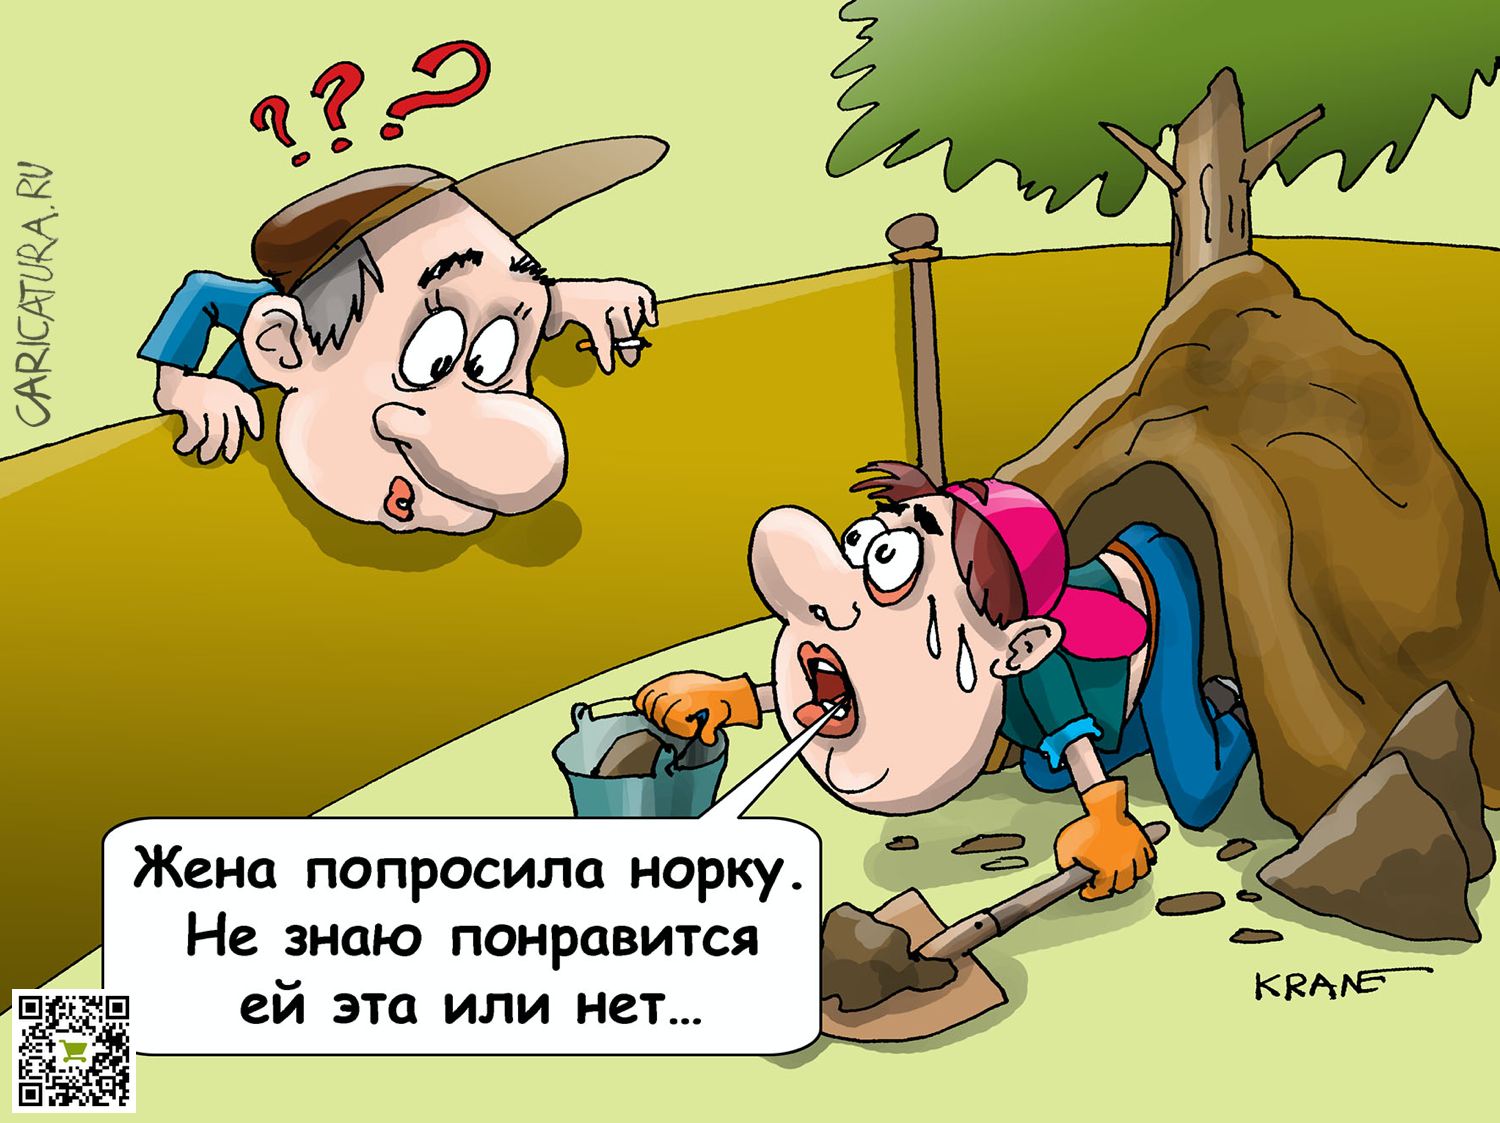 Карикатура "Жена попросила норку", Евгений Кран